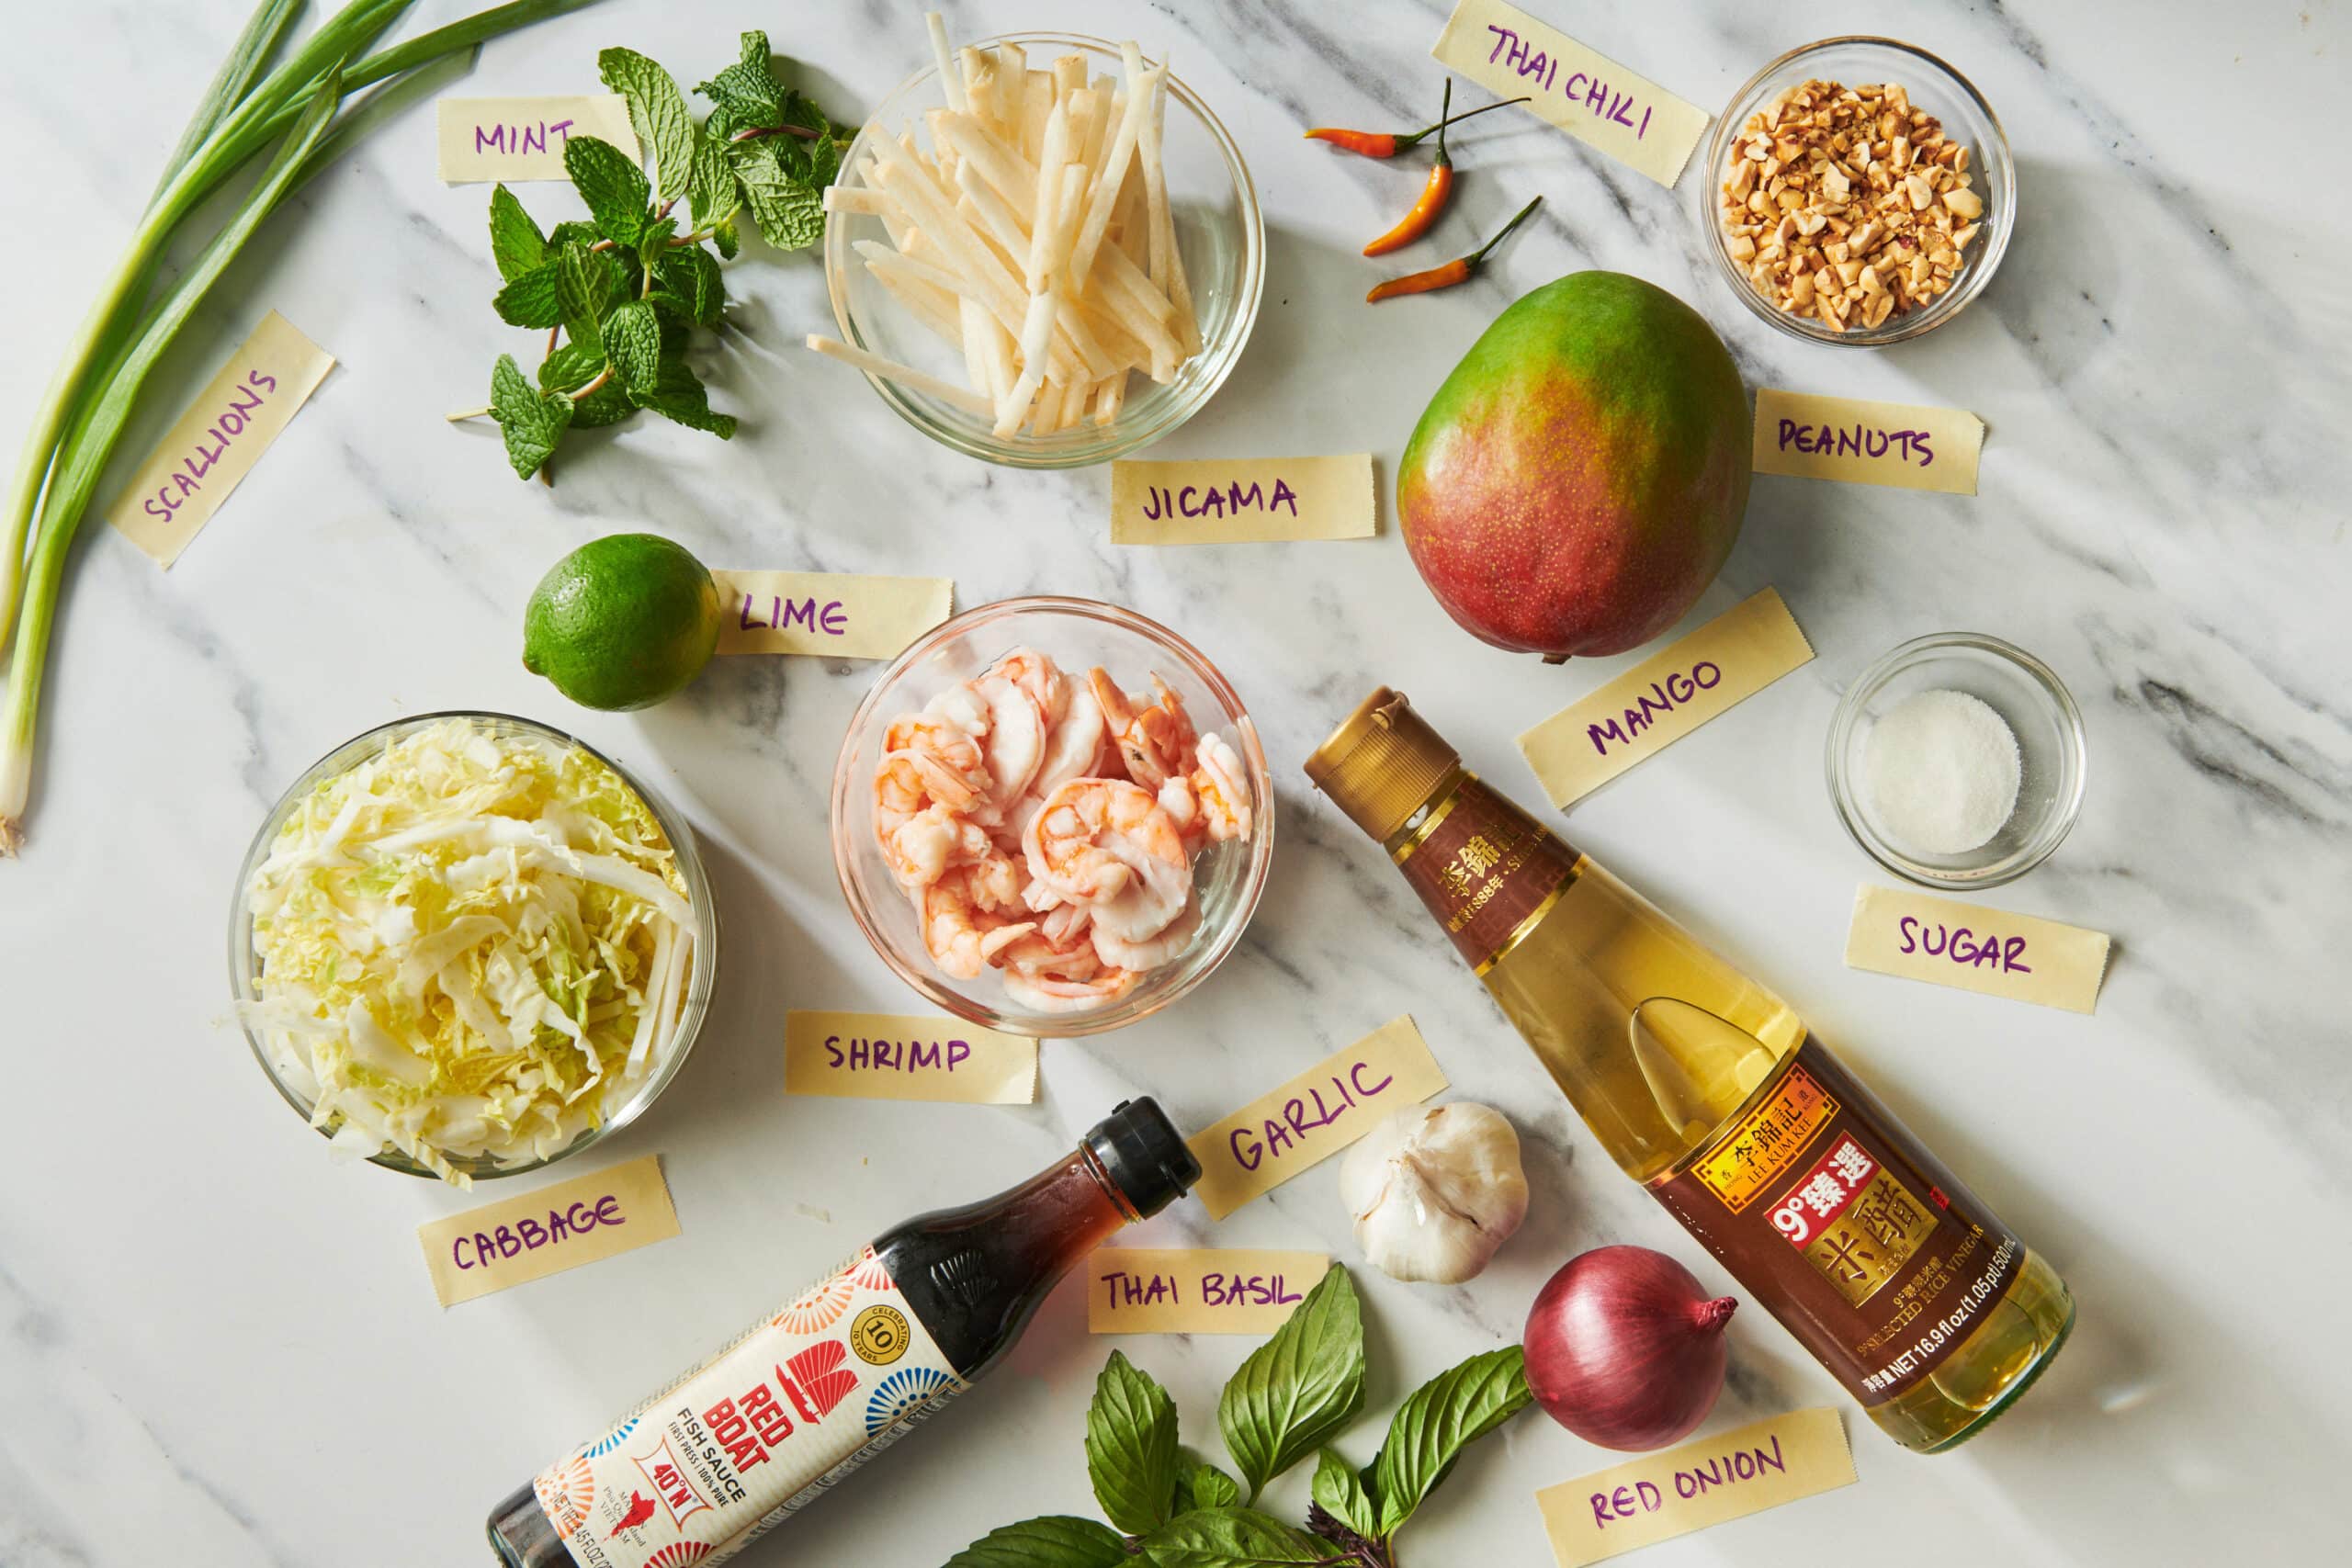 Mango, shrimp, jicama, cabbage, herbs, and other ingredients for salad.